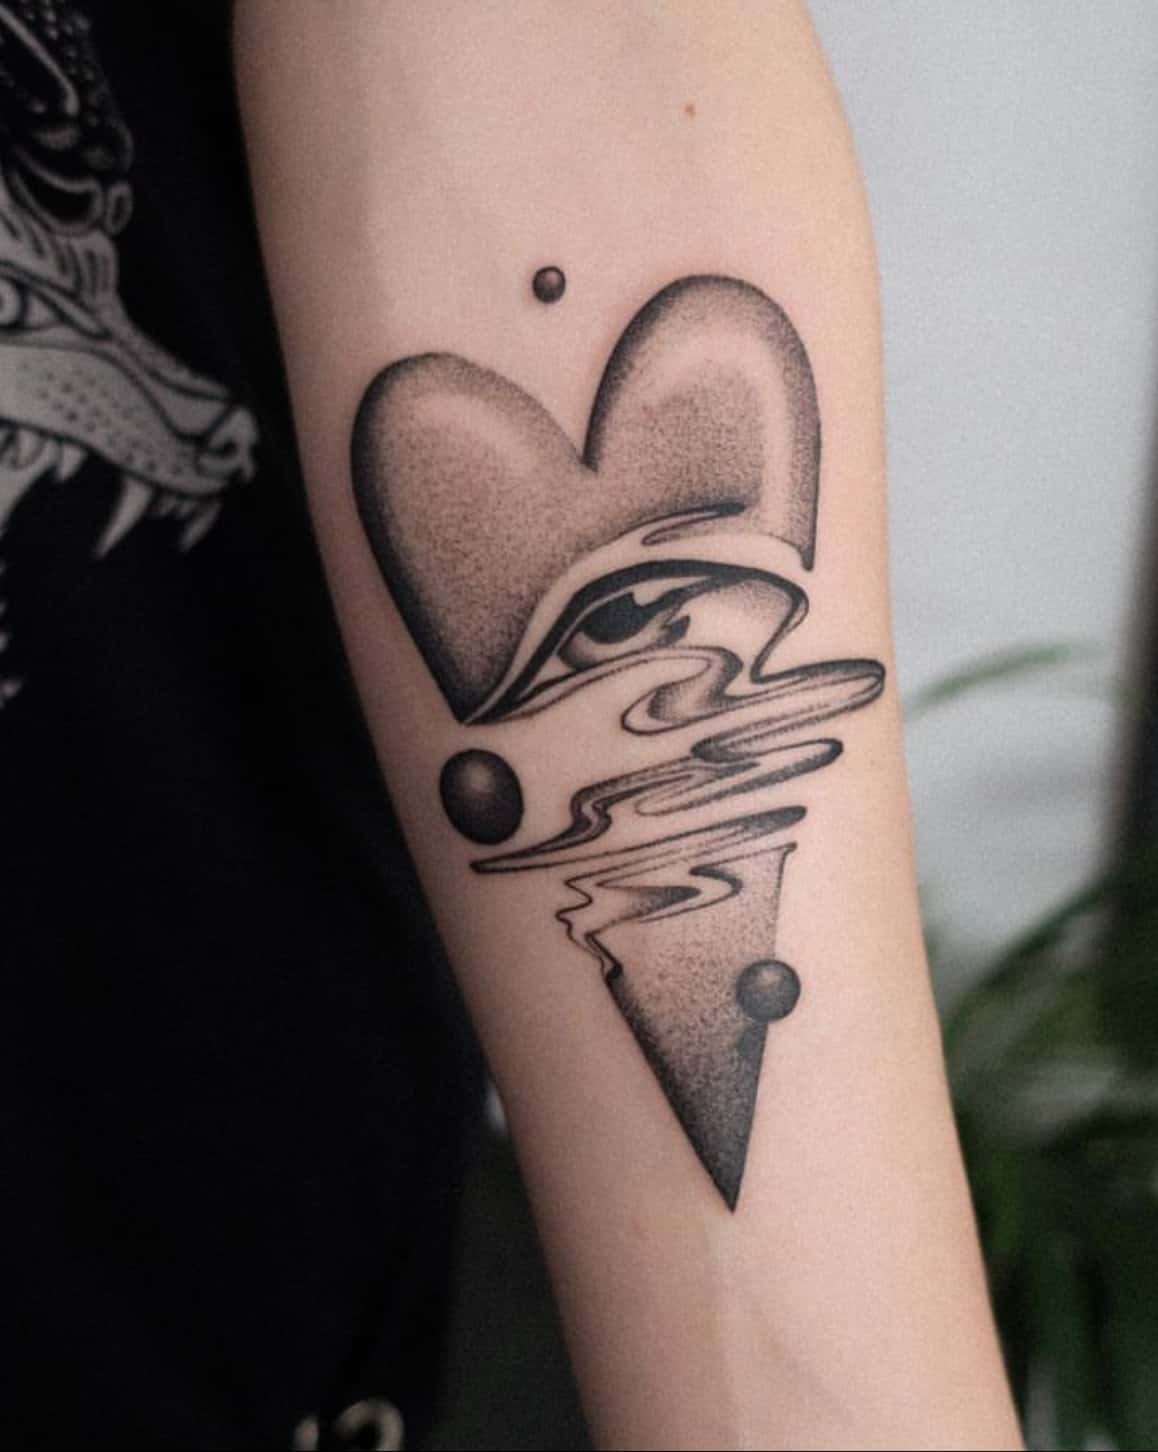 Broken Woman Tattoo by DanielPokorny on DeviantArt